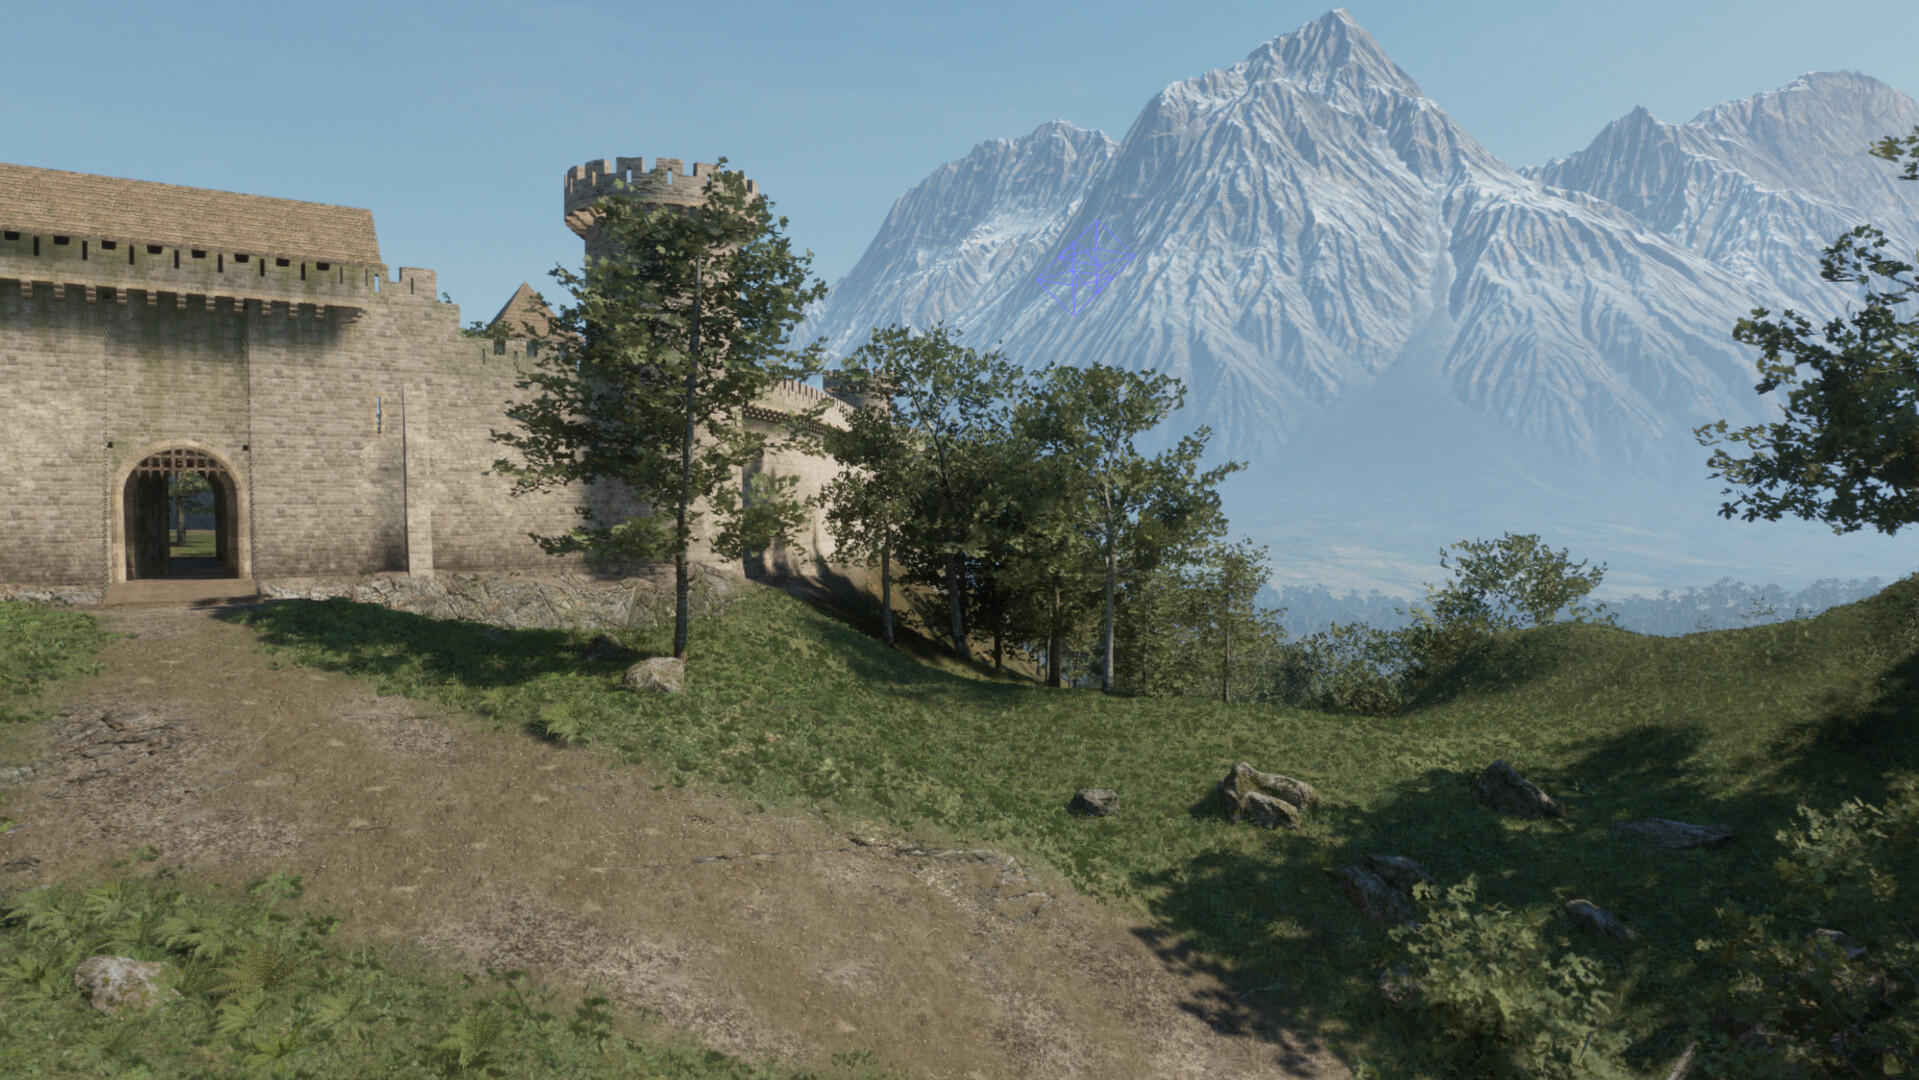 ChaosWorld screenshot game